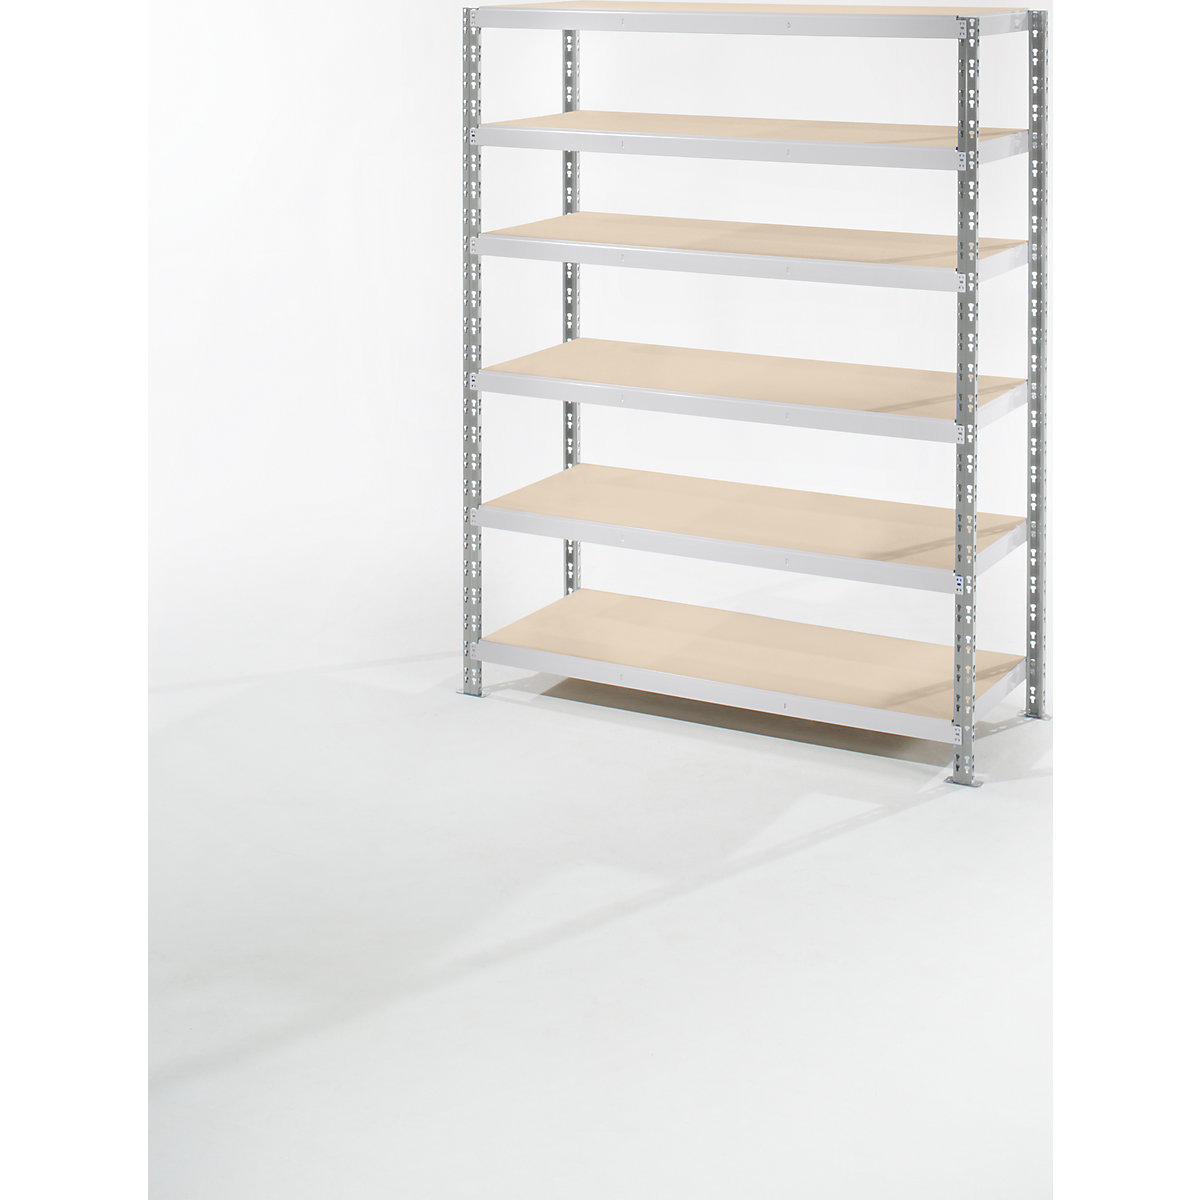 Wide span boltless shelf unit with moulded chipboard shelves, depth 700 mm, extension shelf unit, HxW 1976 x 1525 mm